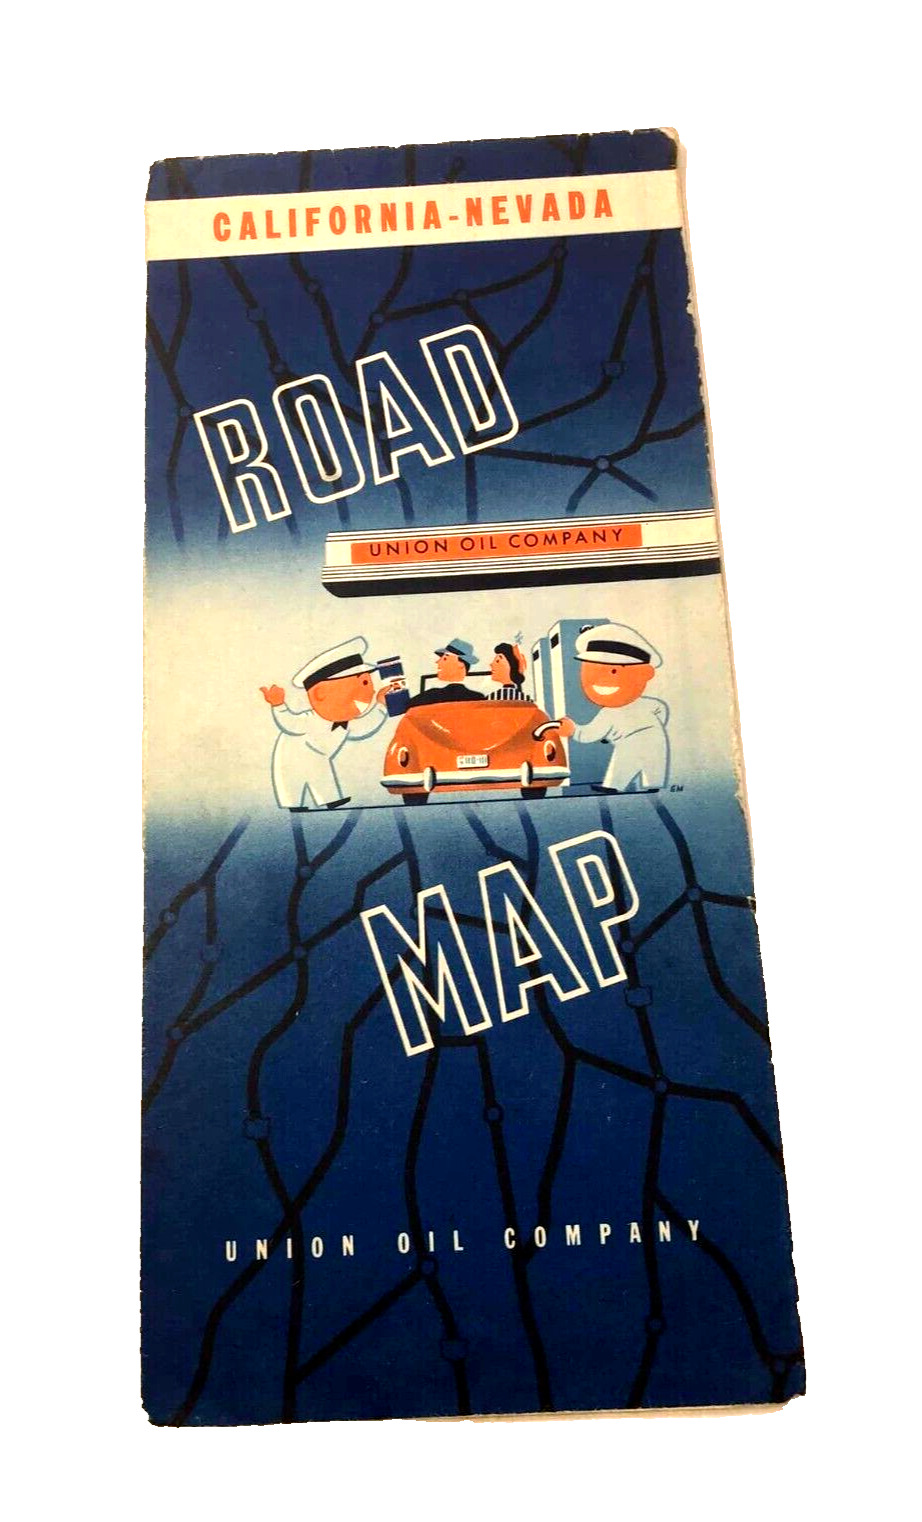 c1940s Union Oil Company California Nevada Road Map